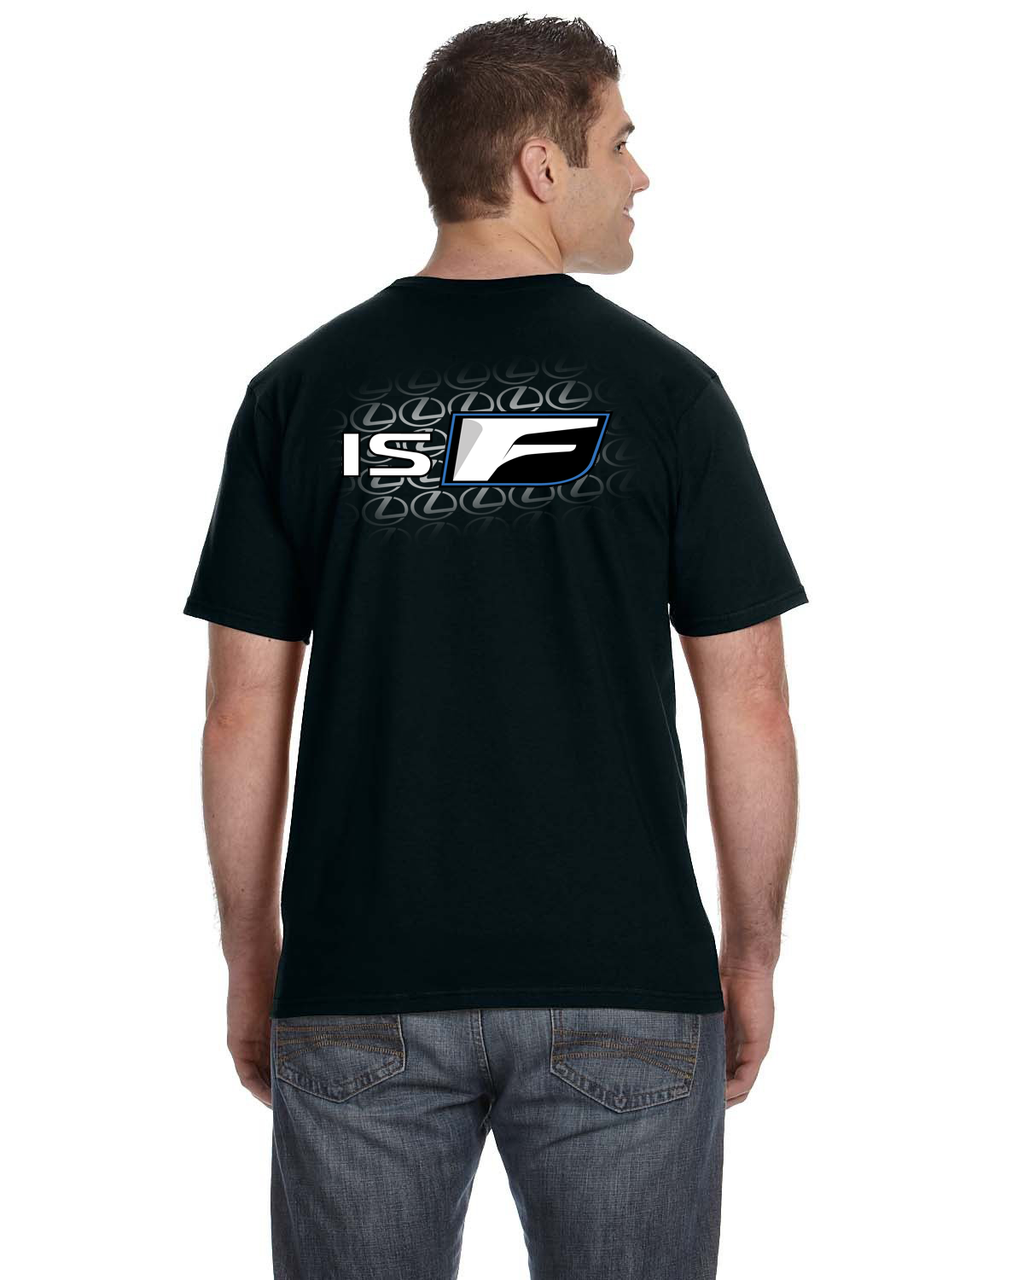 Lexus ISF T-Shirt